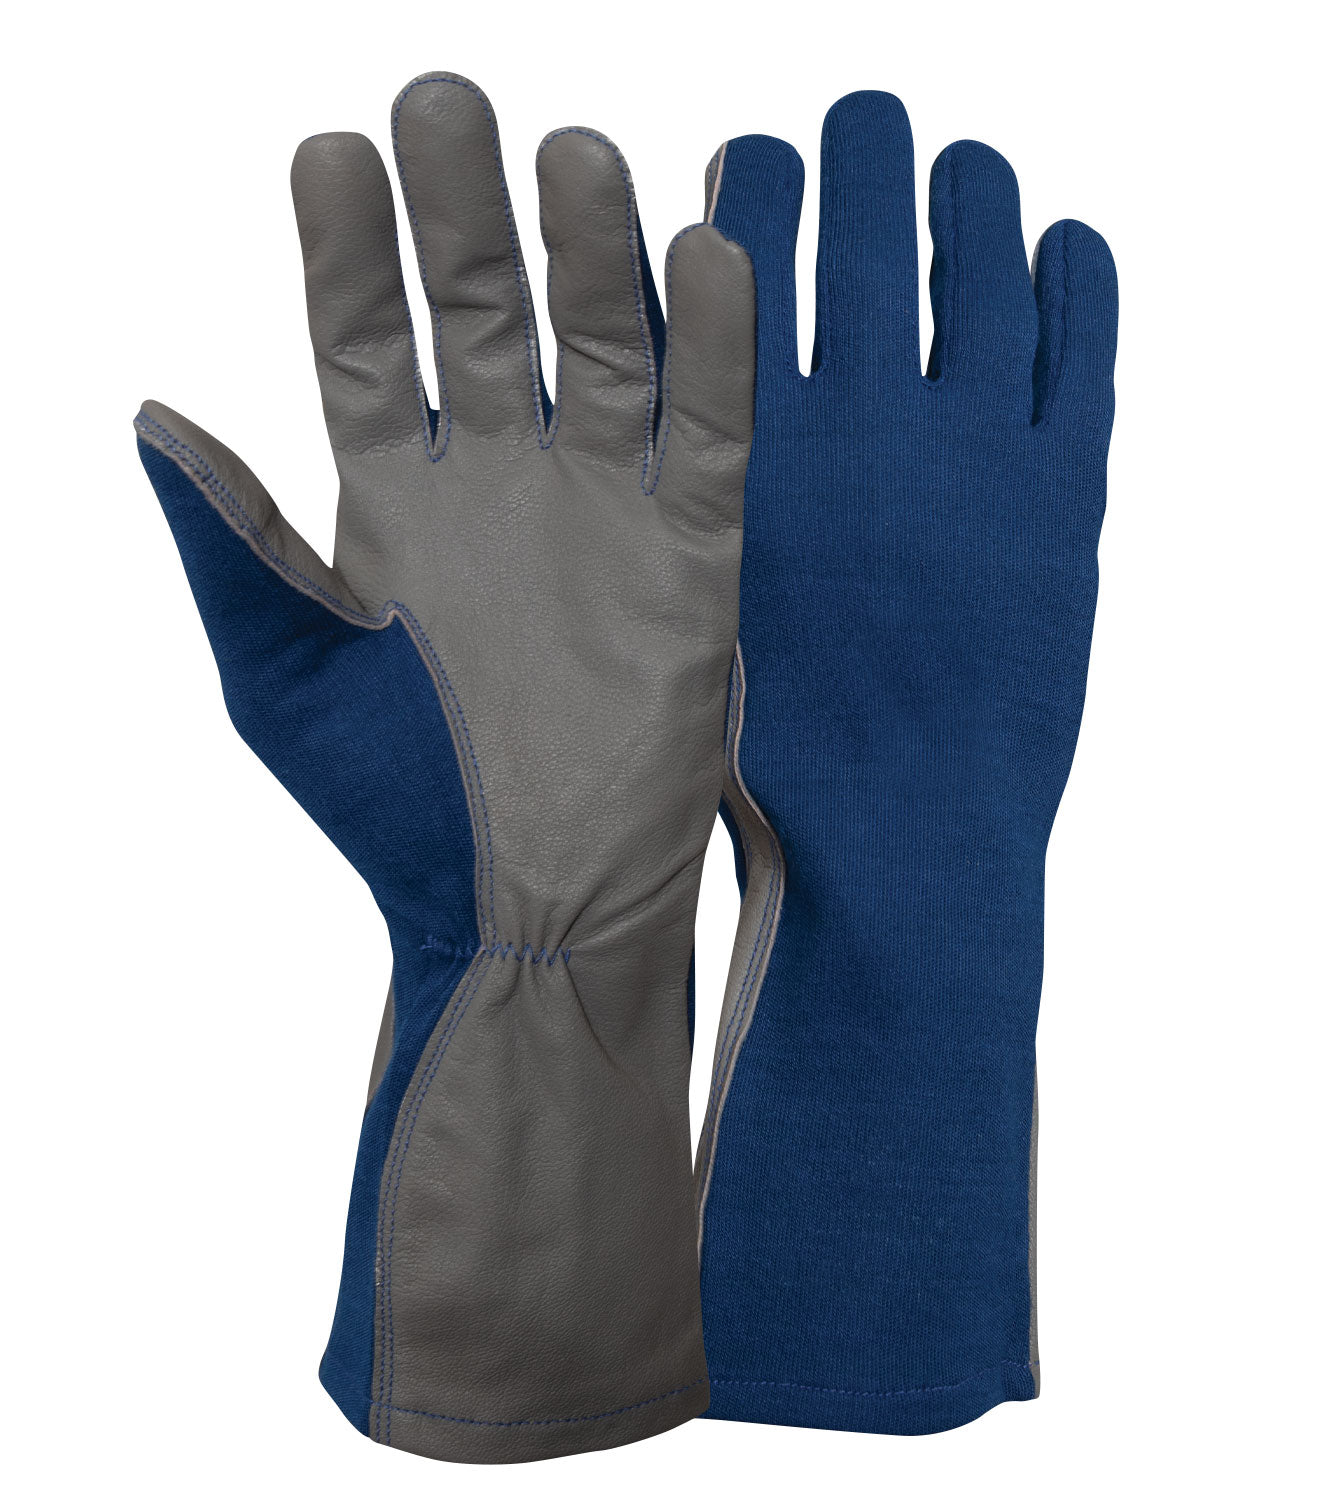 G.I. Nomex Flight Gloves Gloves MilTac Tactical Military Outdoor Gear Australia